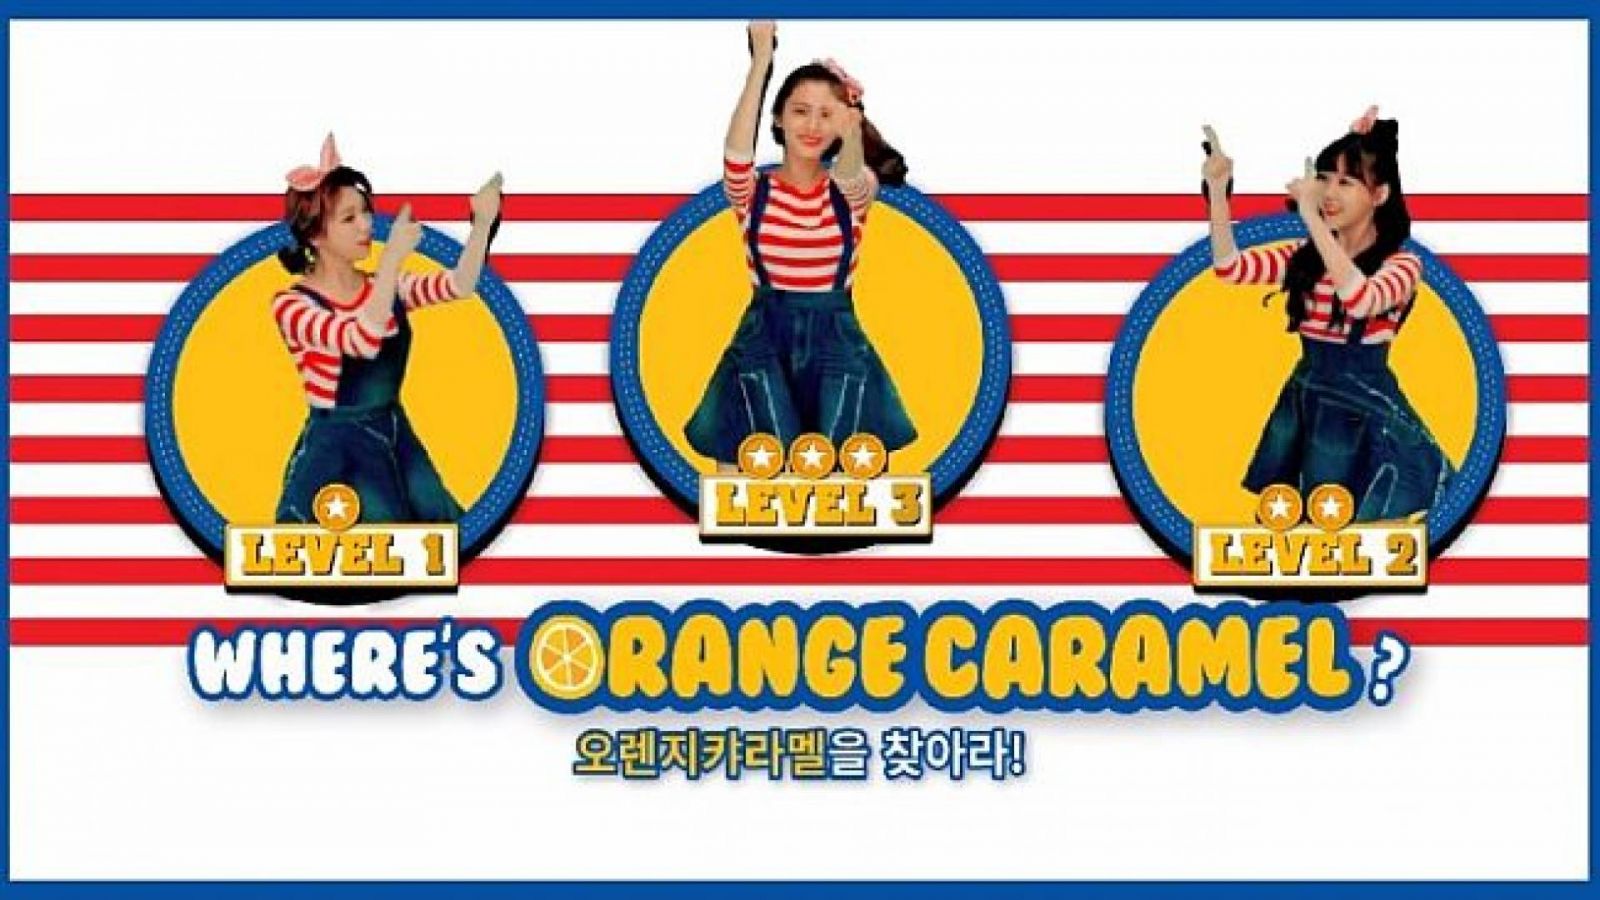 Novo single do Orange Caramel © Pledis Entertainment